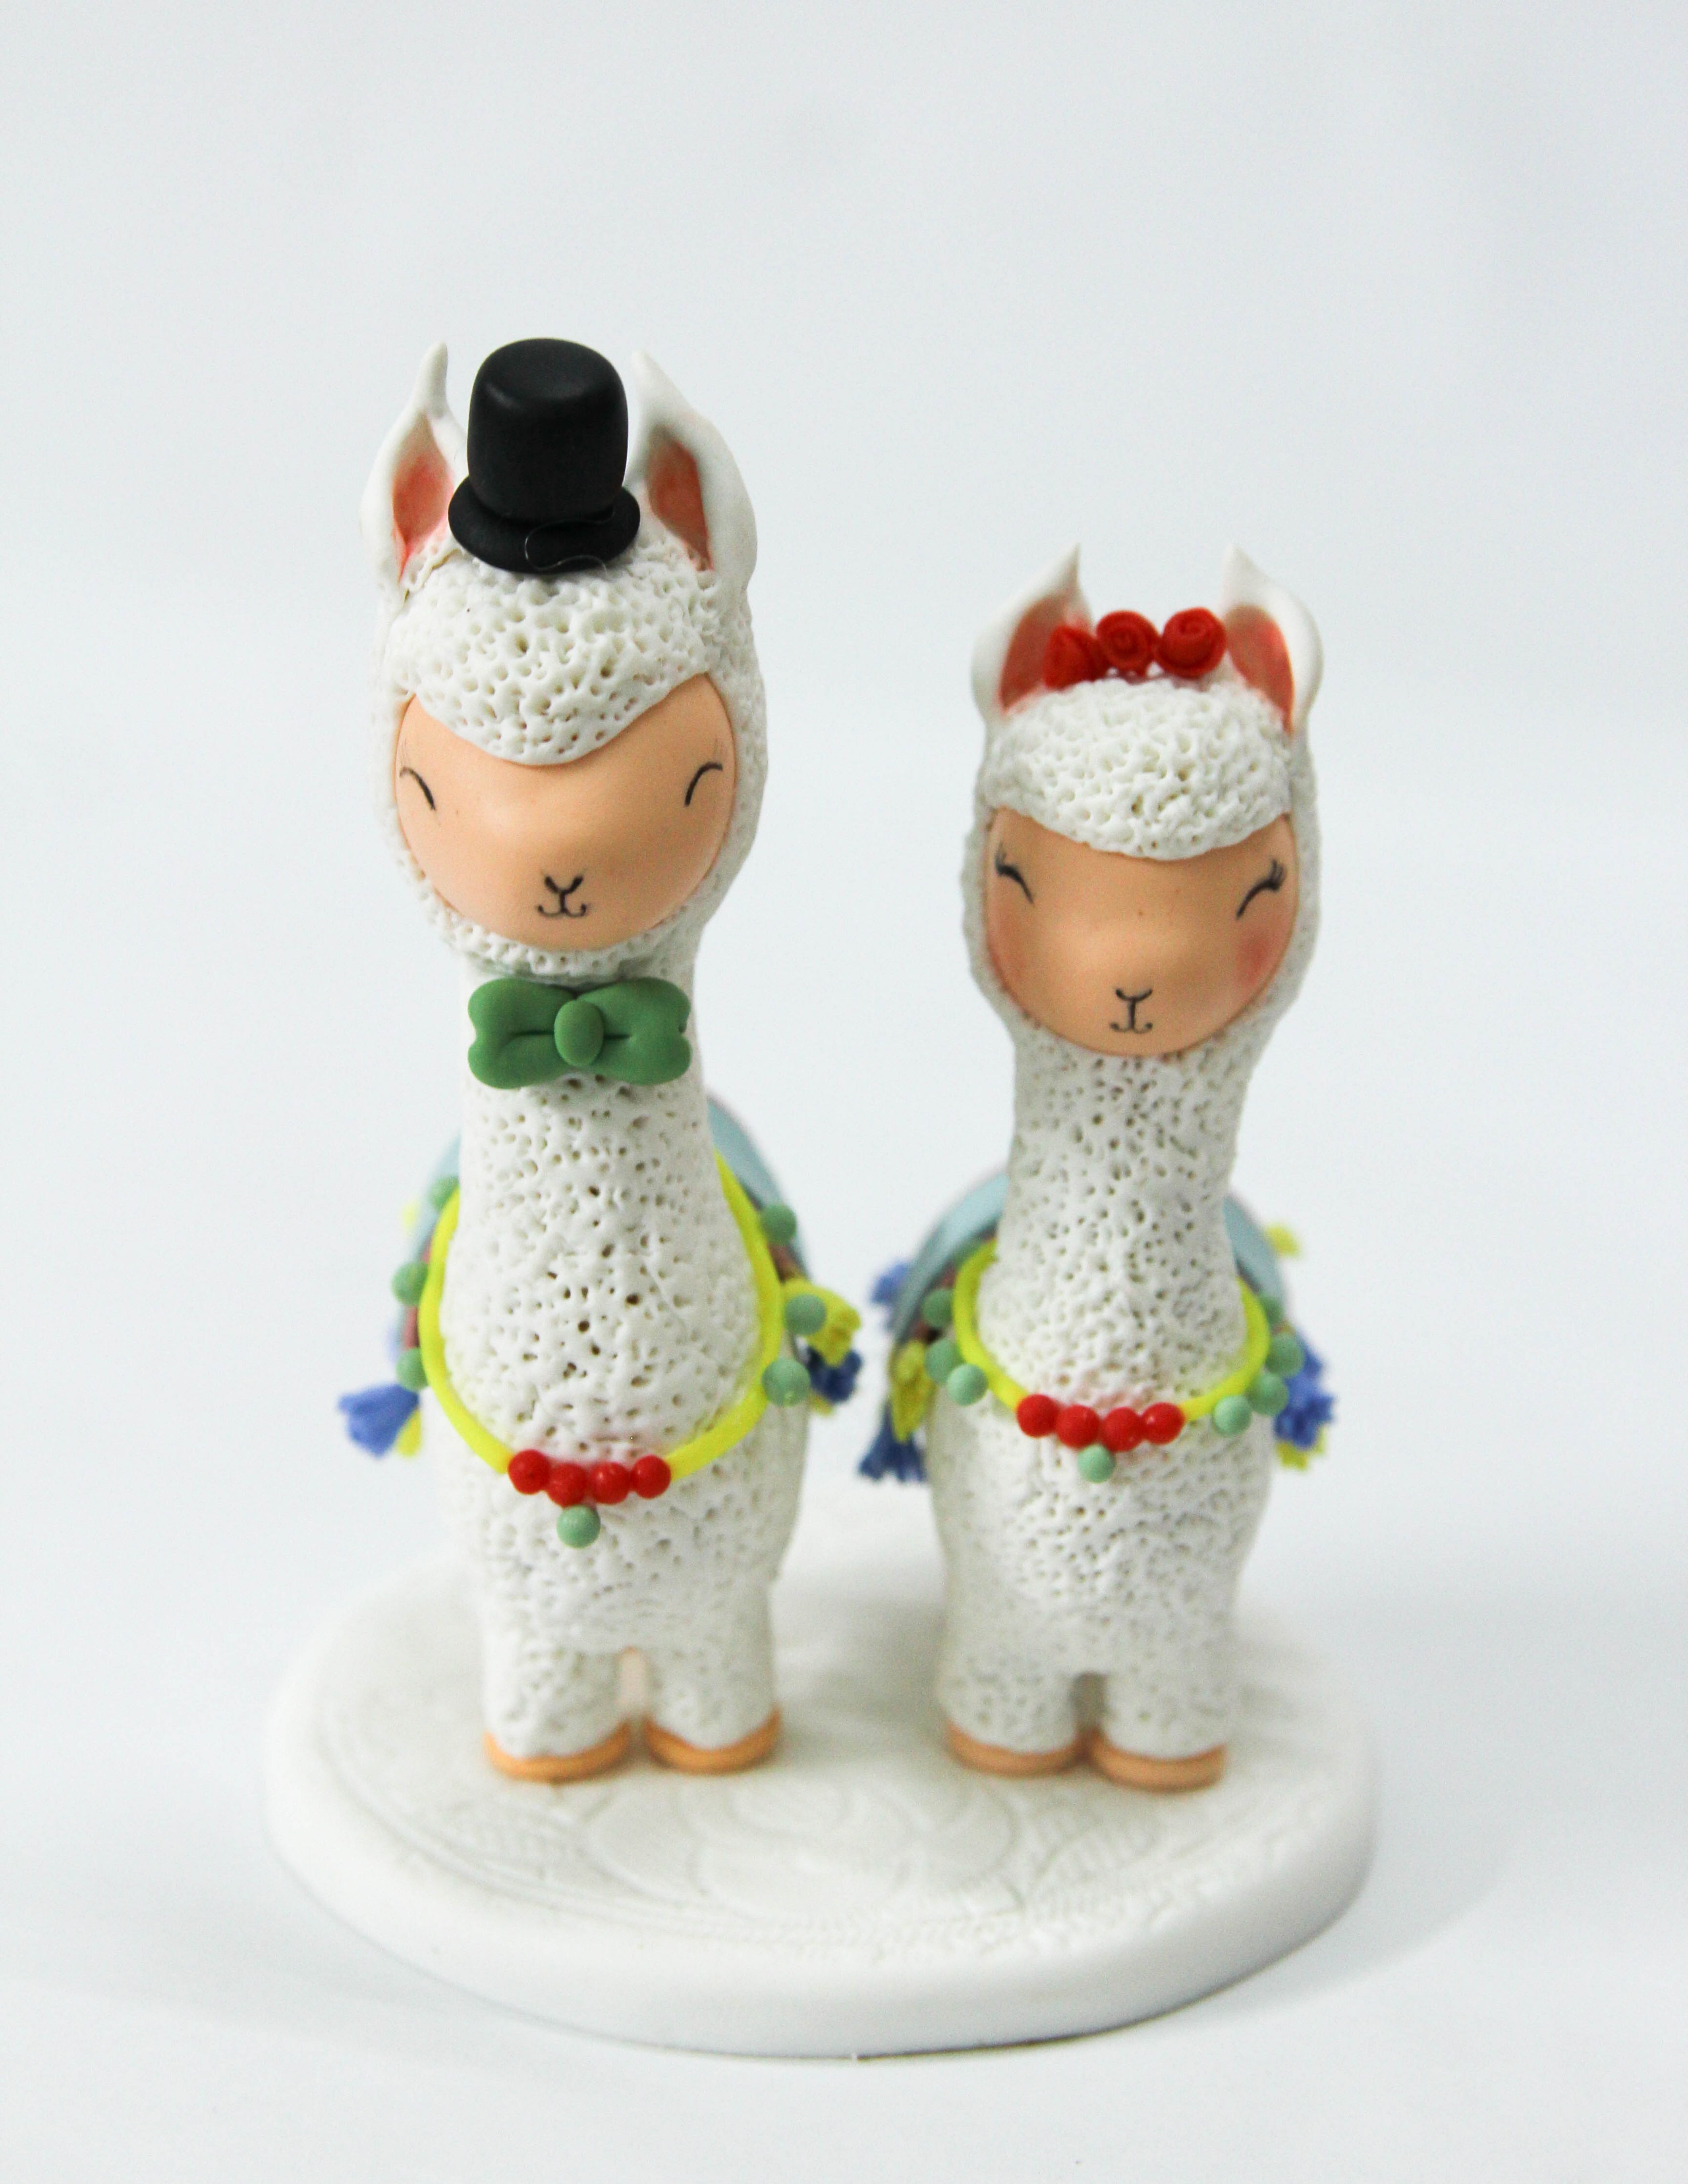 Picture of Alpaca Wedding Cake Topper, Animal Wedding Cake Decoration